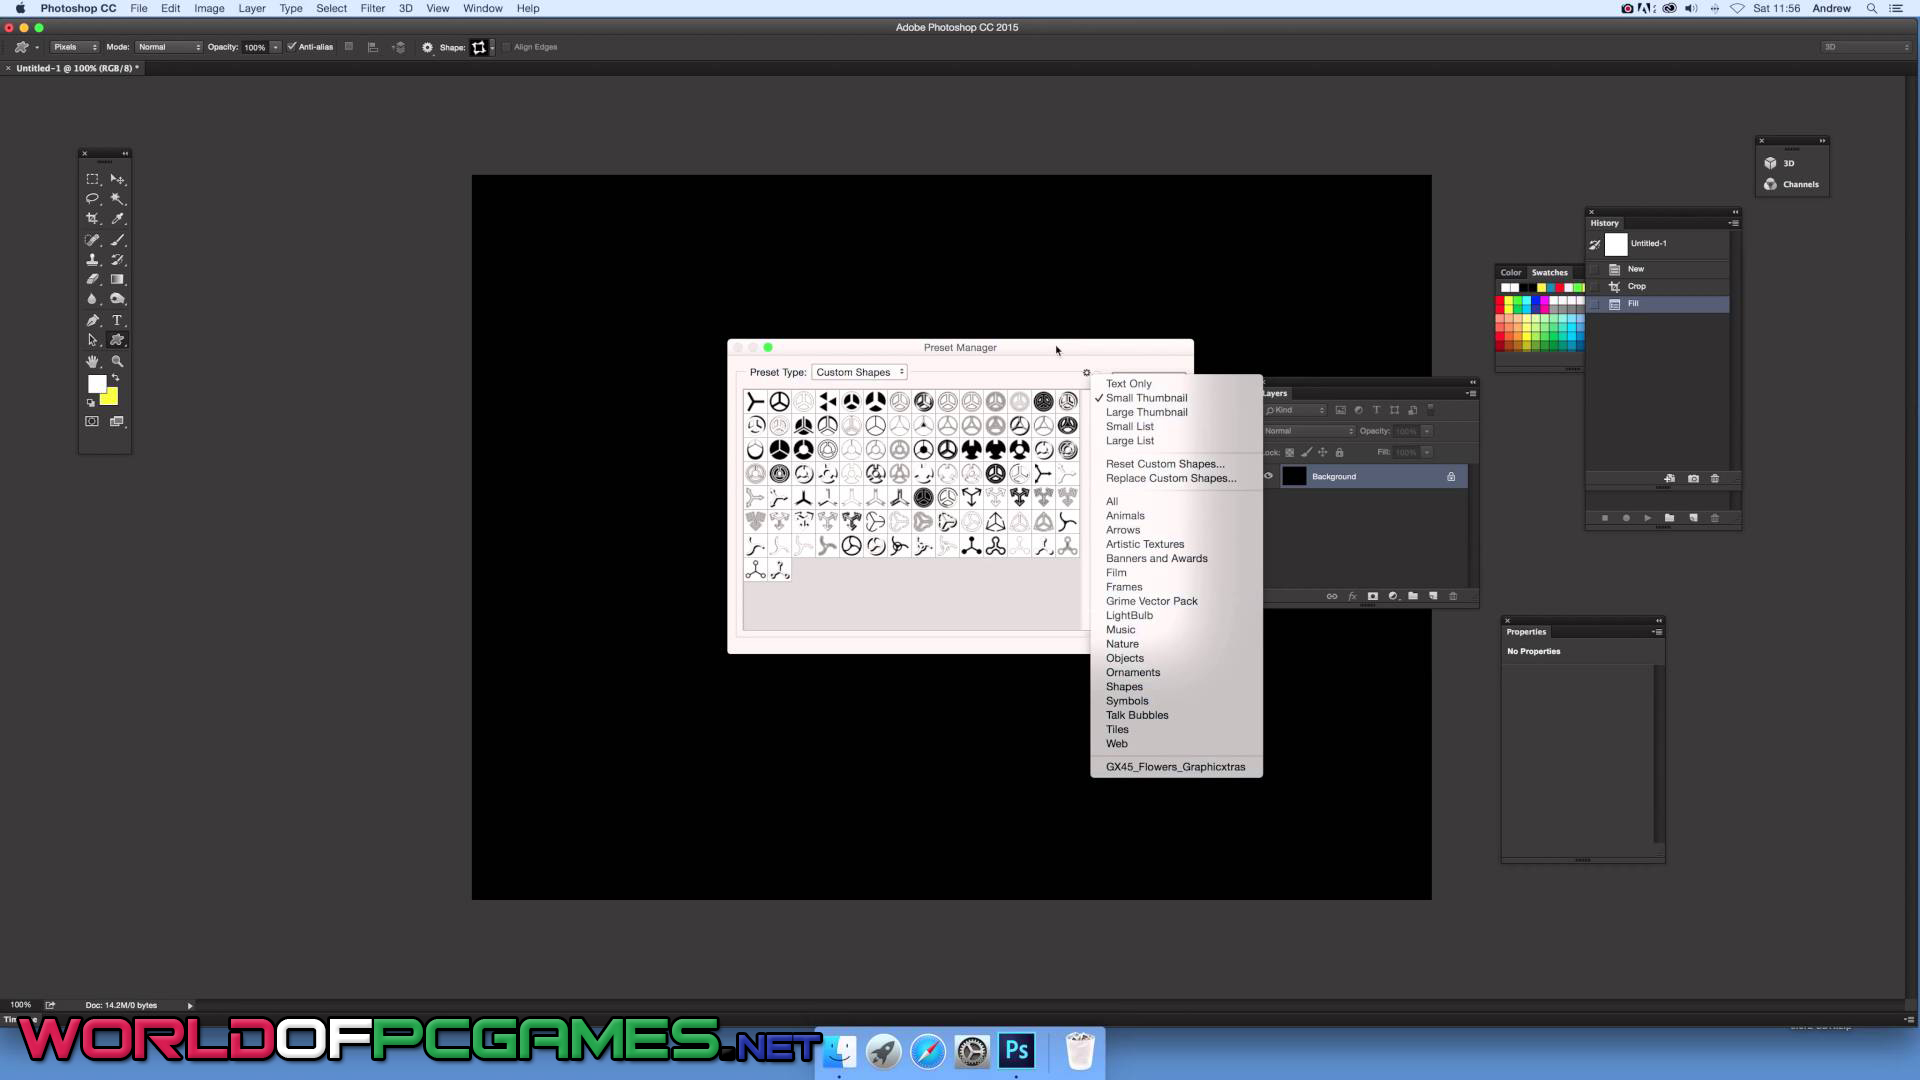 Adobe Photoshop CC 17 Free Download For Mac OS By worldof-pcgames.netm